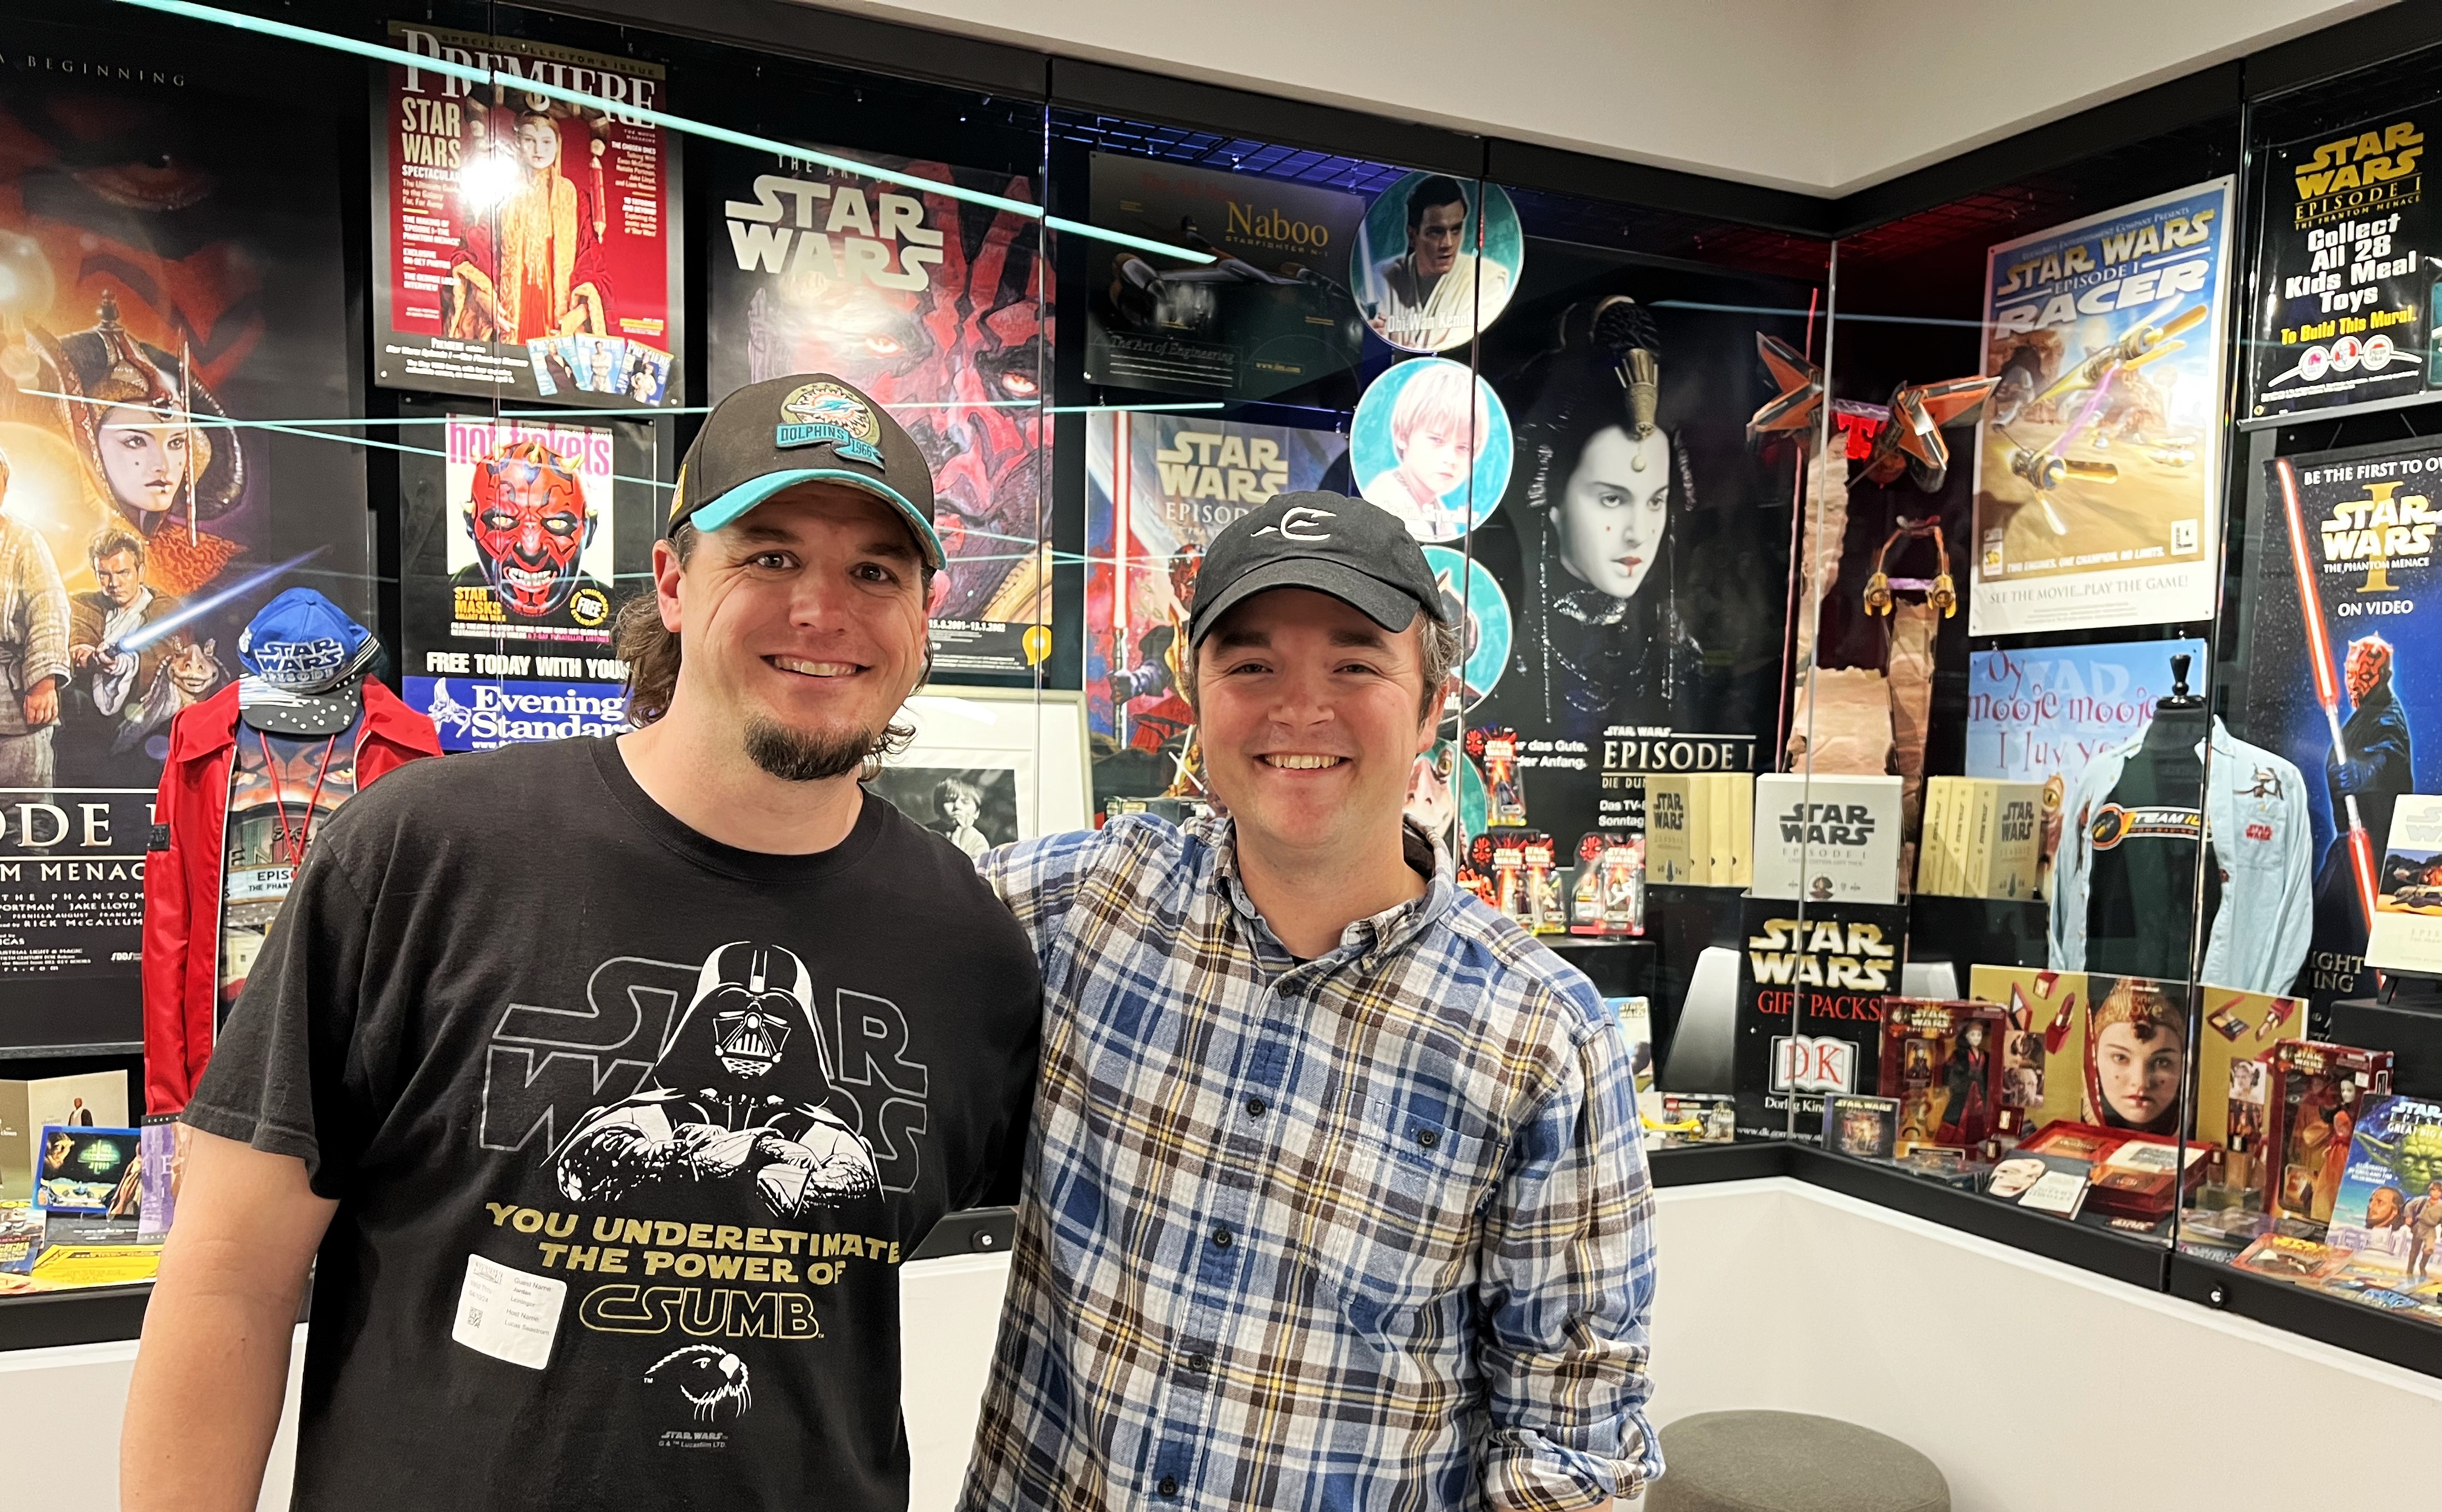 Jordan Leininger and Lucas Seastrom Star Wars exhibit